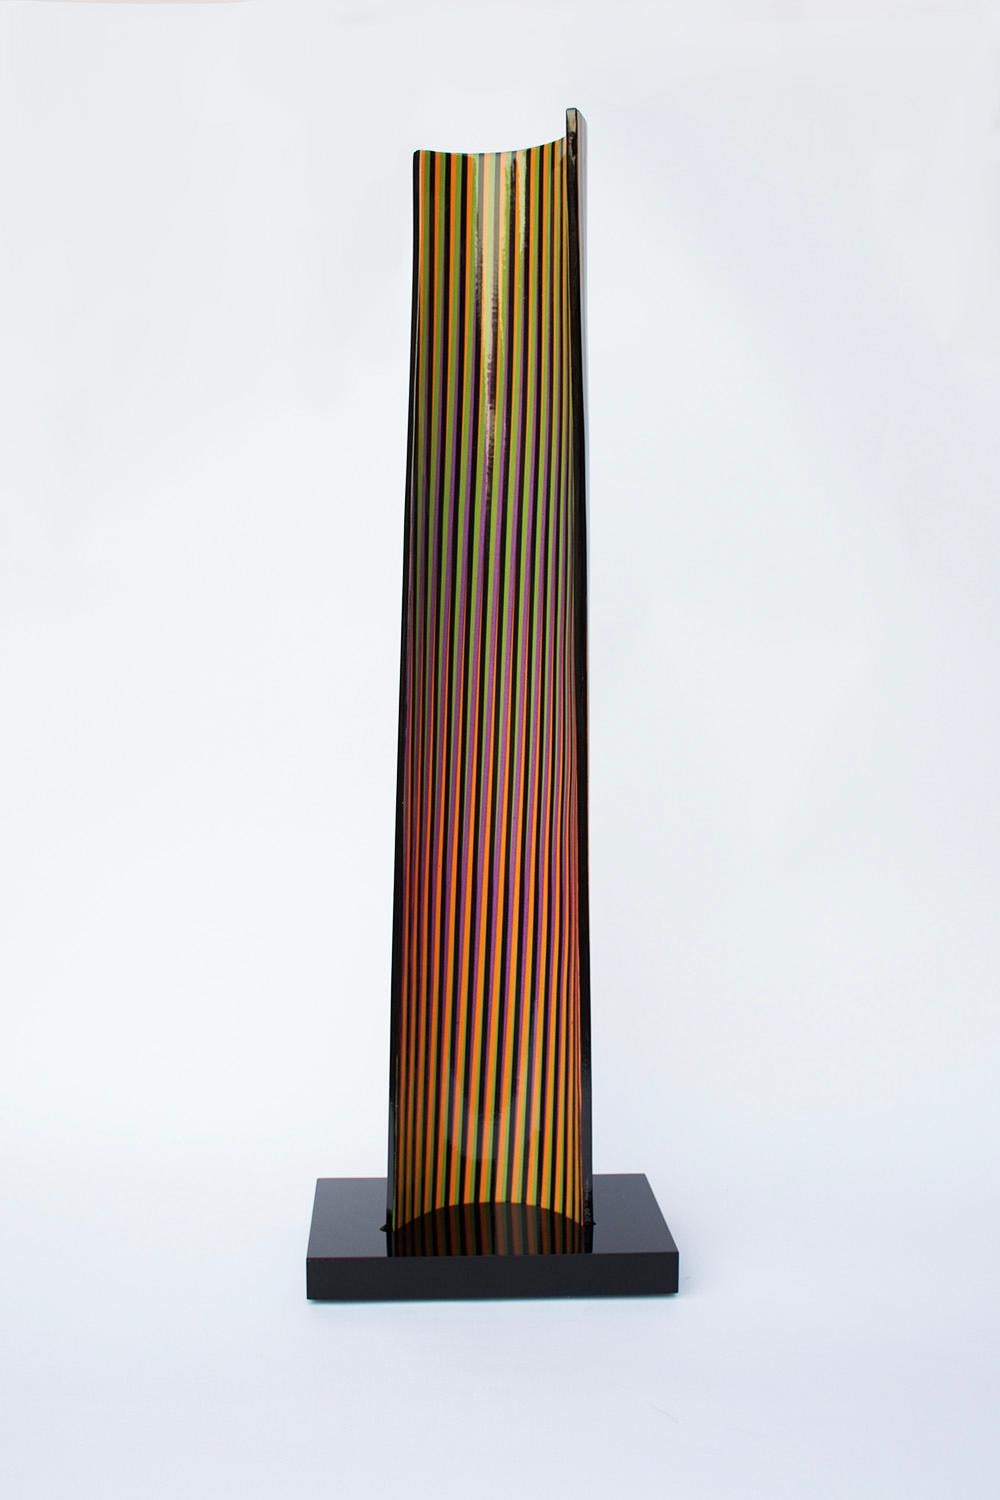 Carlos Cruz-Diez Abstract Sculpture – CARLOS CRUZ-DÍEZ - CROMOVELA 11. Skulptur in limitierter Auflage. Op Art, Modernität